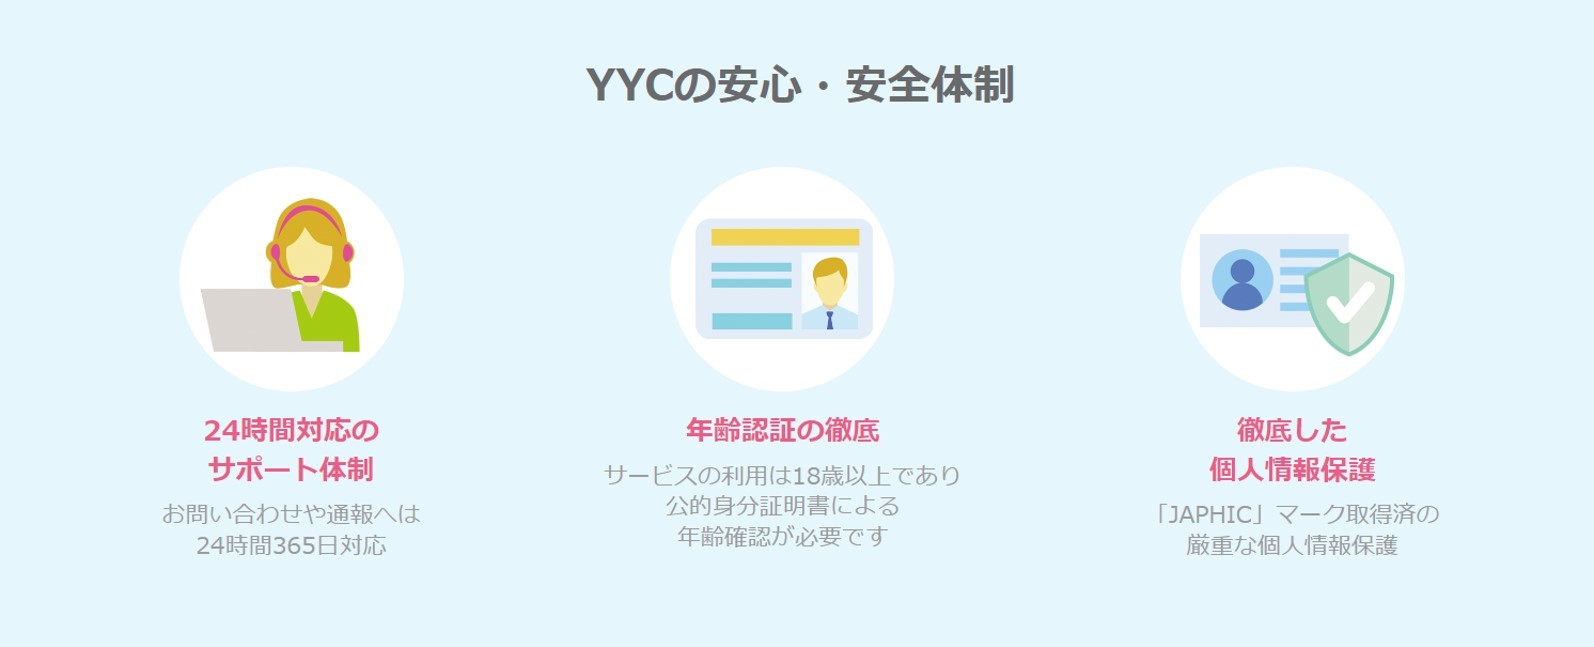 YYCはサポート体制が24時間365日対応　